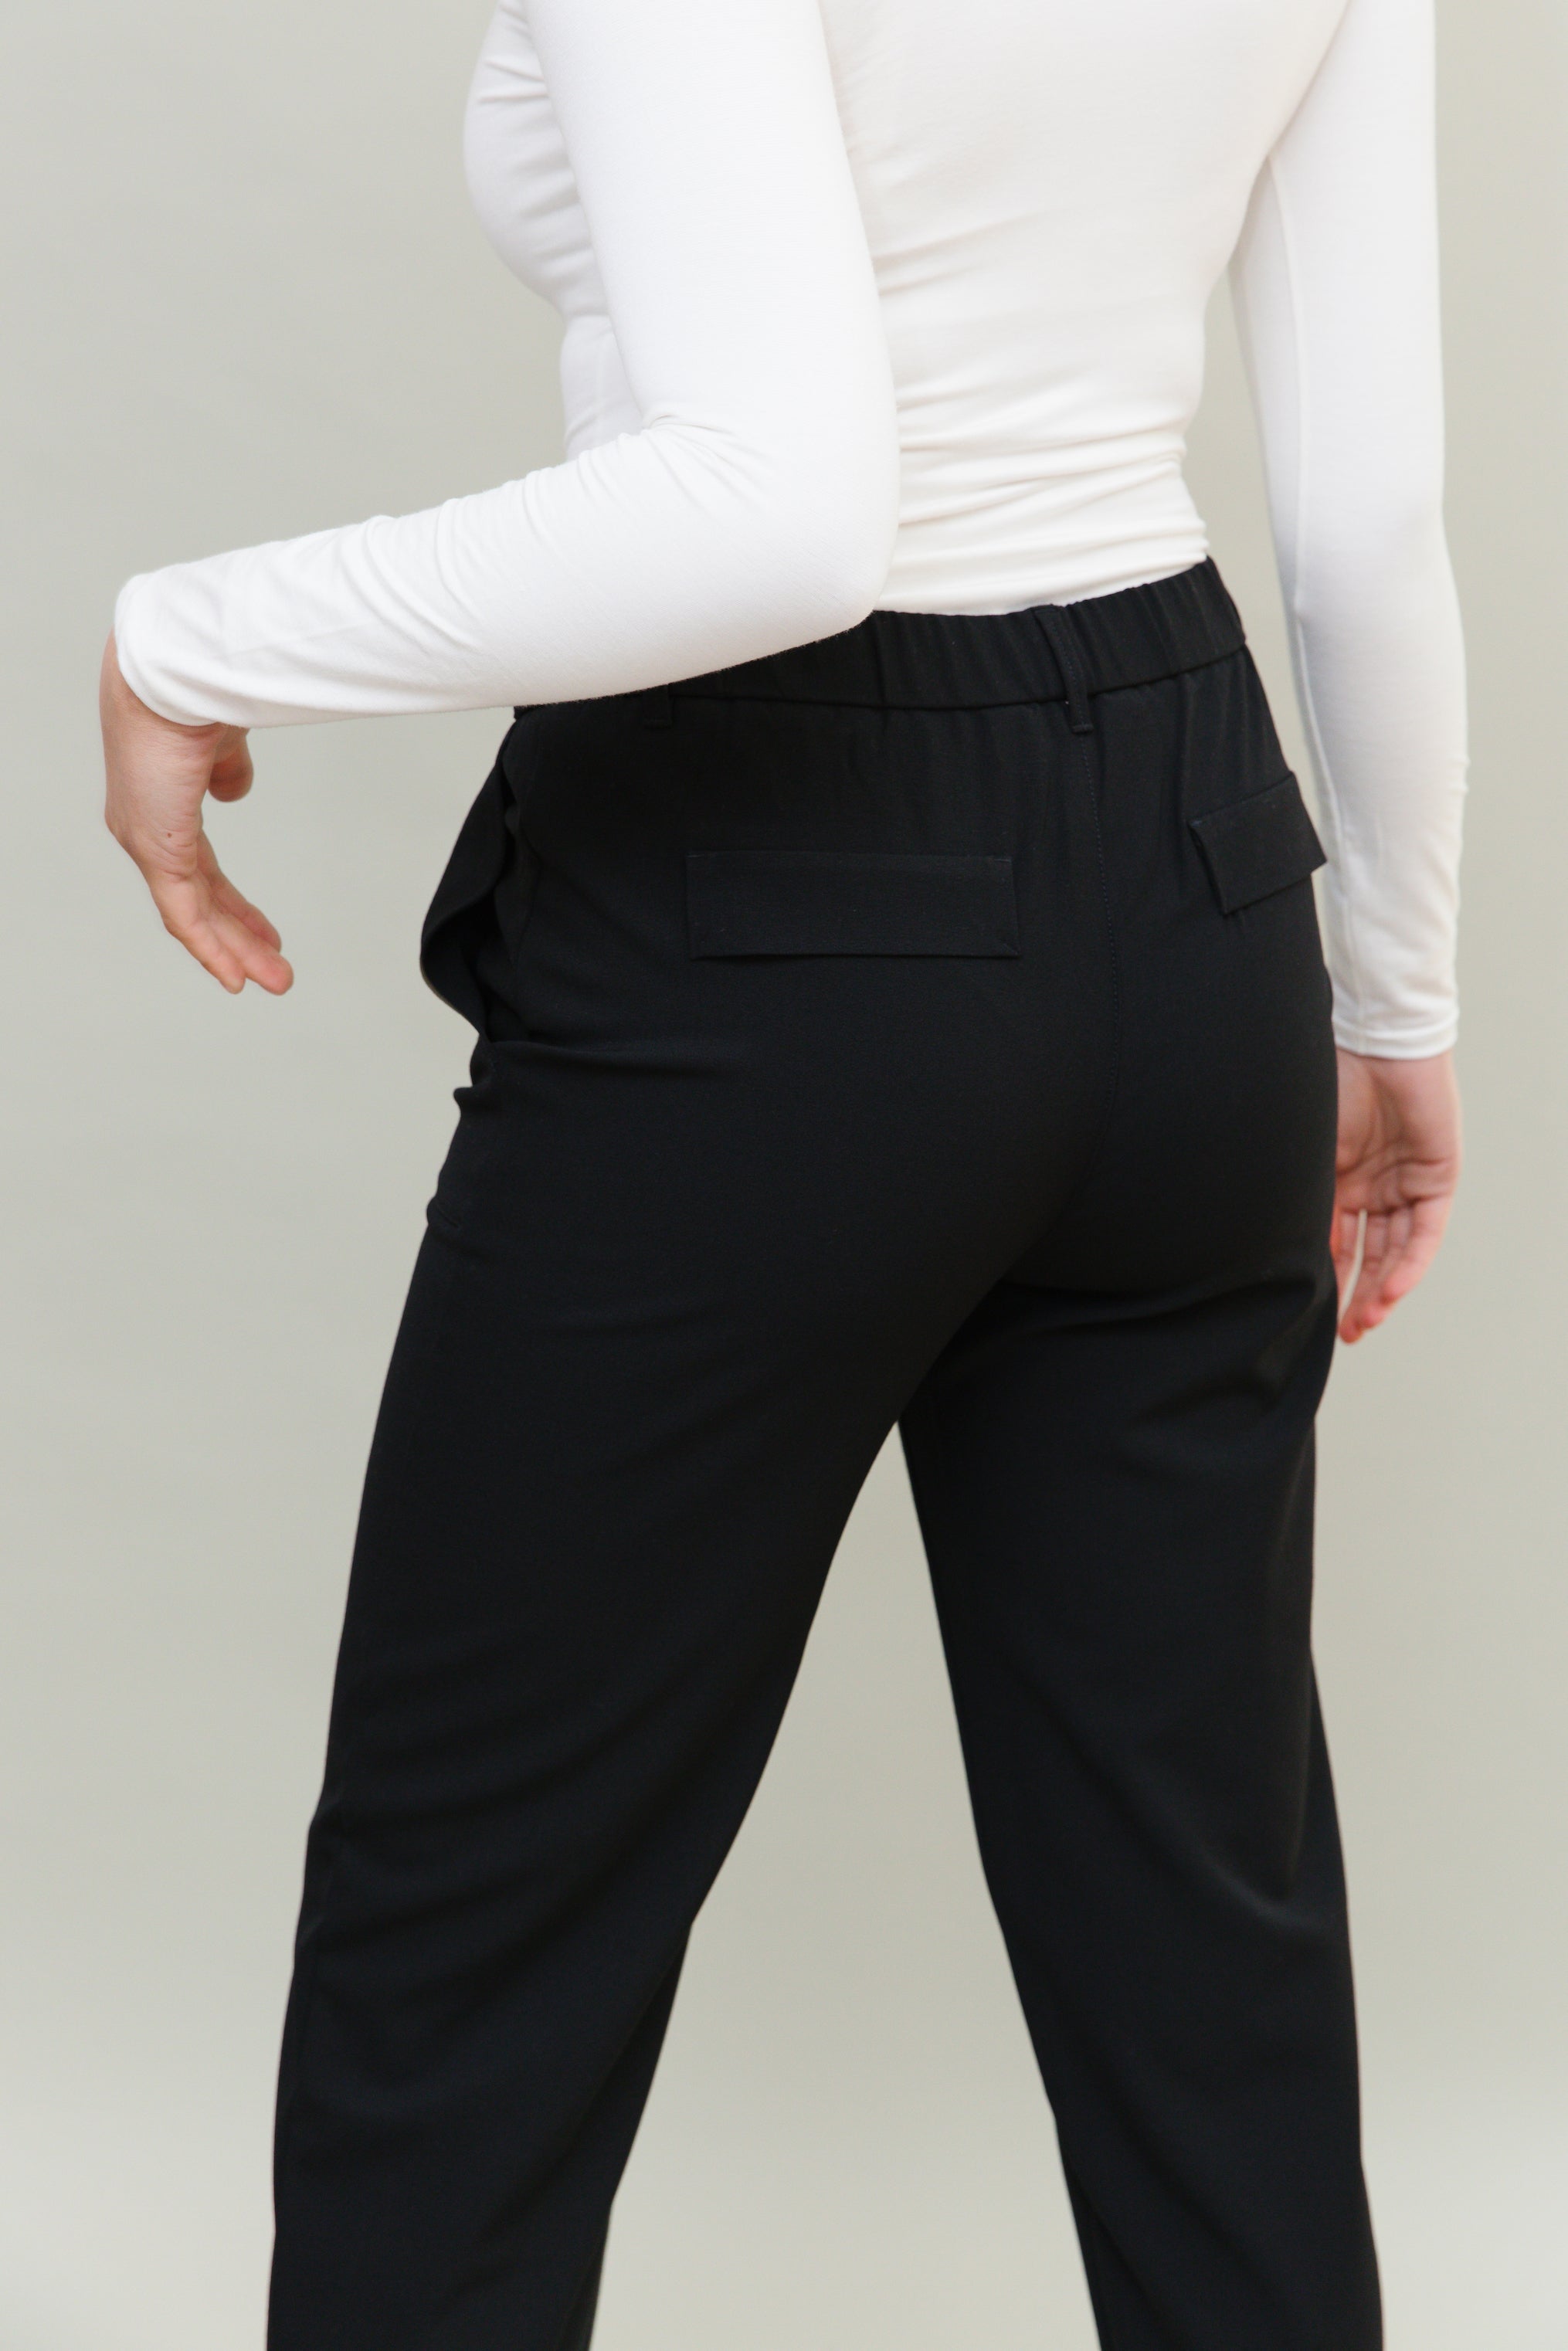 Modern Tapered Leg Black Trouser, elasticated waist, pockets and darted taper at hem